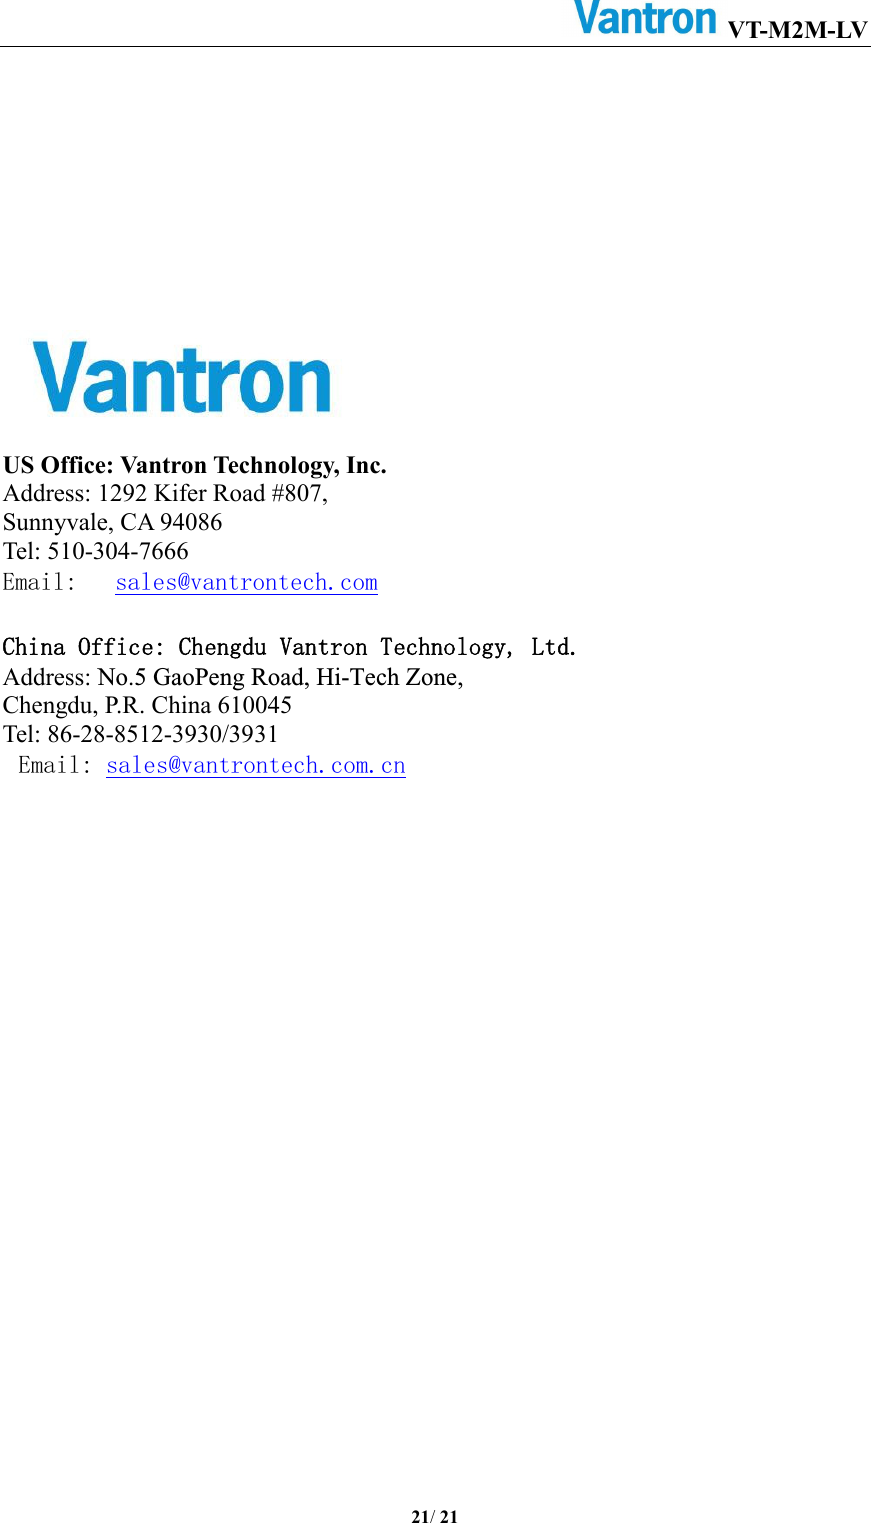 VT-M2M-LV       21/ 21             US Office: Vantron Technology, Inc.     Address: 1292 Kifer Road #807,   Sunnyvale, CA 94086 Tel: 510-304-7666     Email:   sales@vantrontech.com  China Office: Chengdu Vantron Technology, Ltd. Address: No.5 GaoPeng Road, Hi-Tech Zone,Chengdu, P.R. China 610045 Tel: 86-28-8512-3930/3931Email: sales@vantrontech.com.cn 